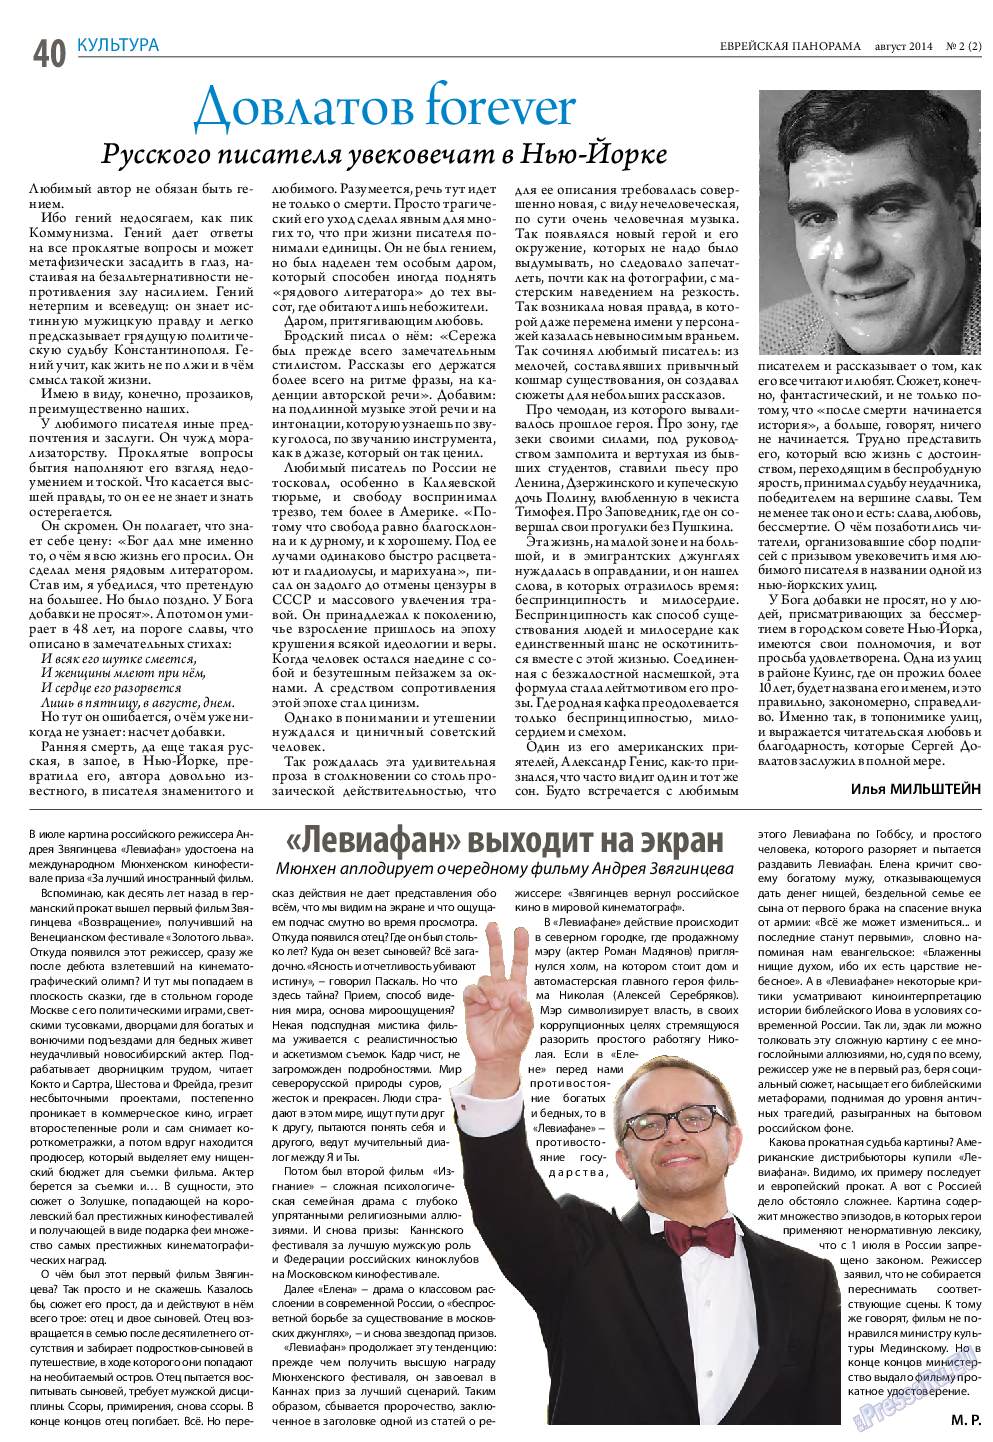 Еврейская панорама, газета. 2014 №2 стр.40